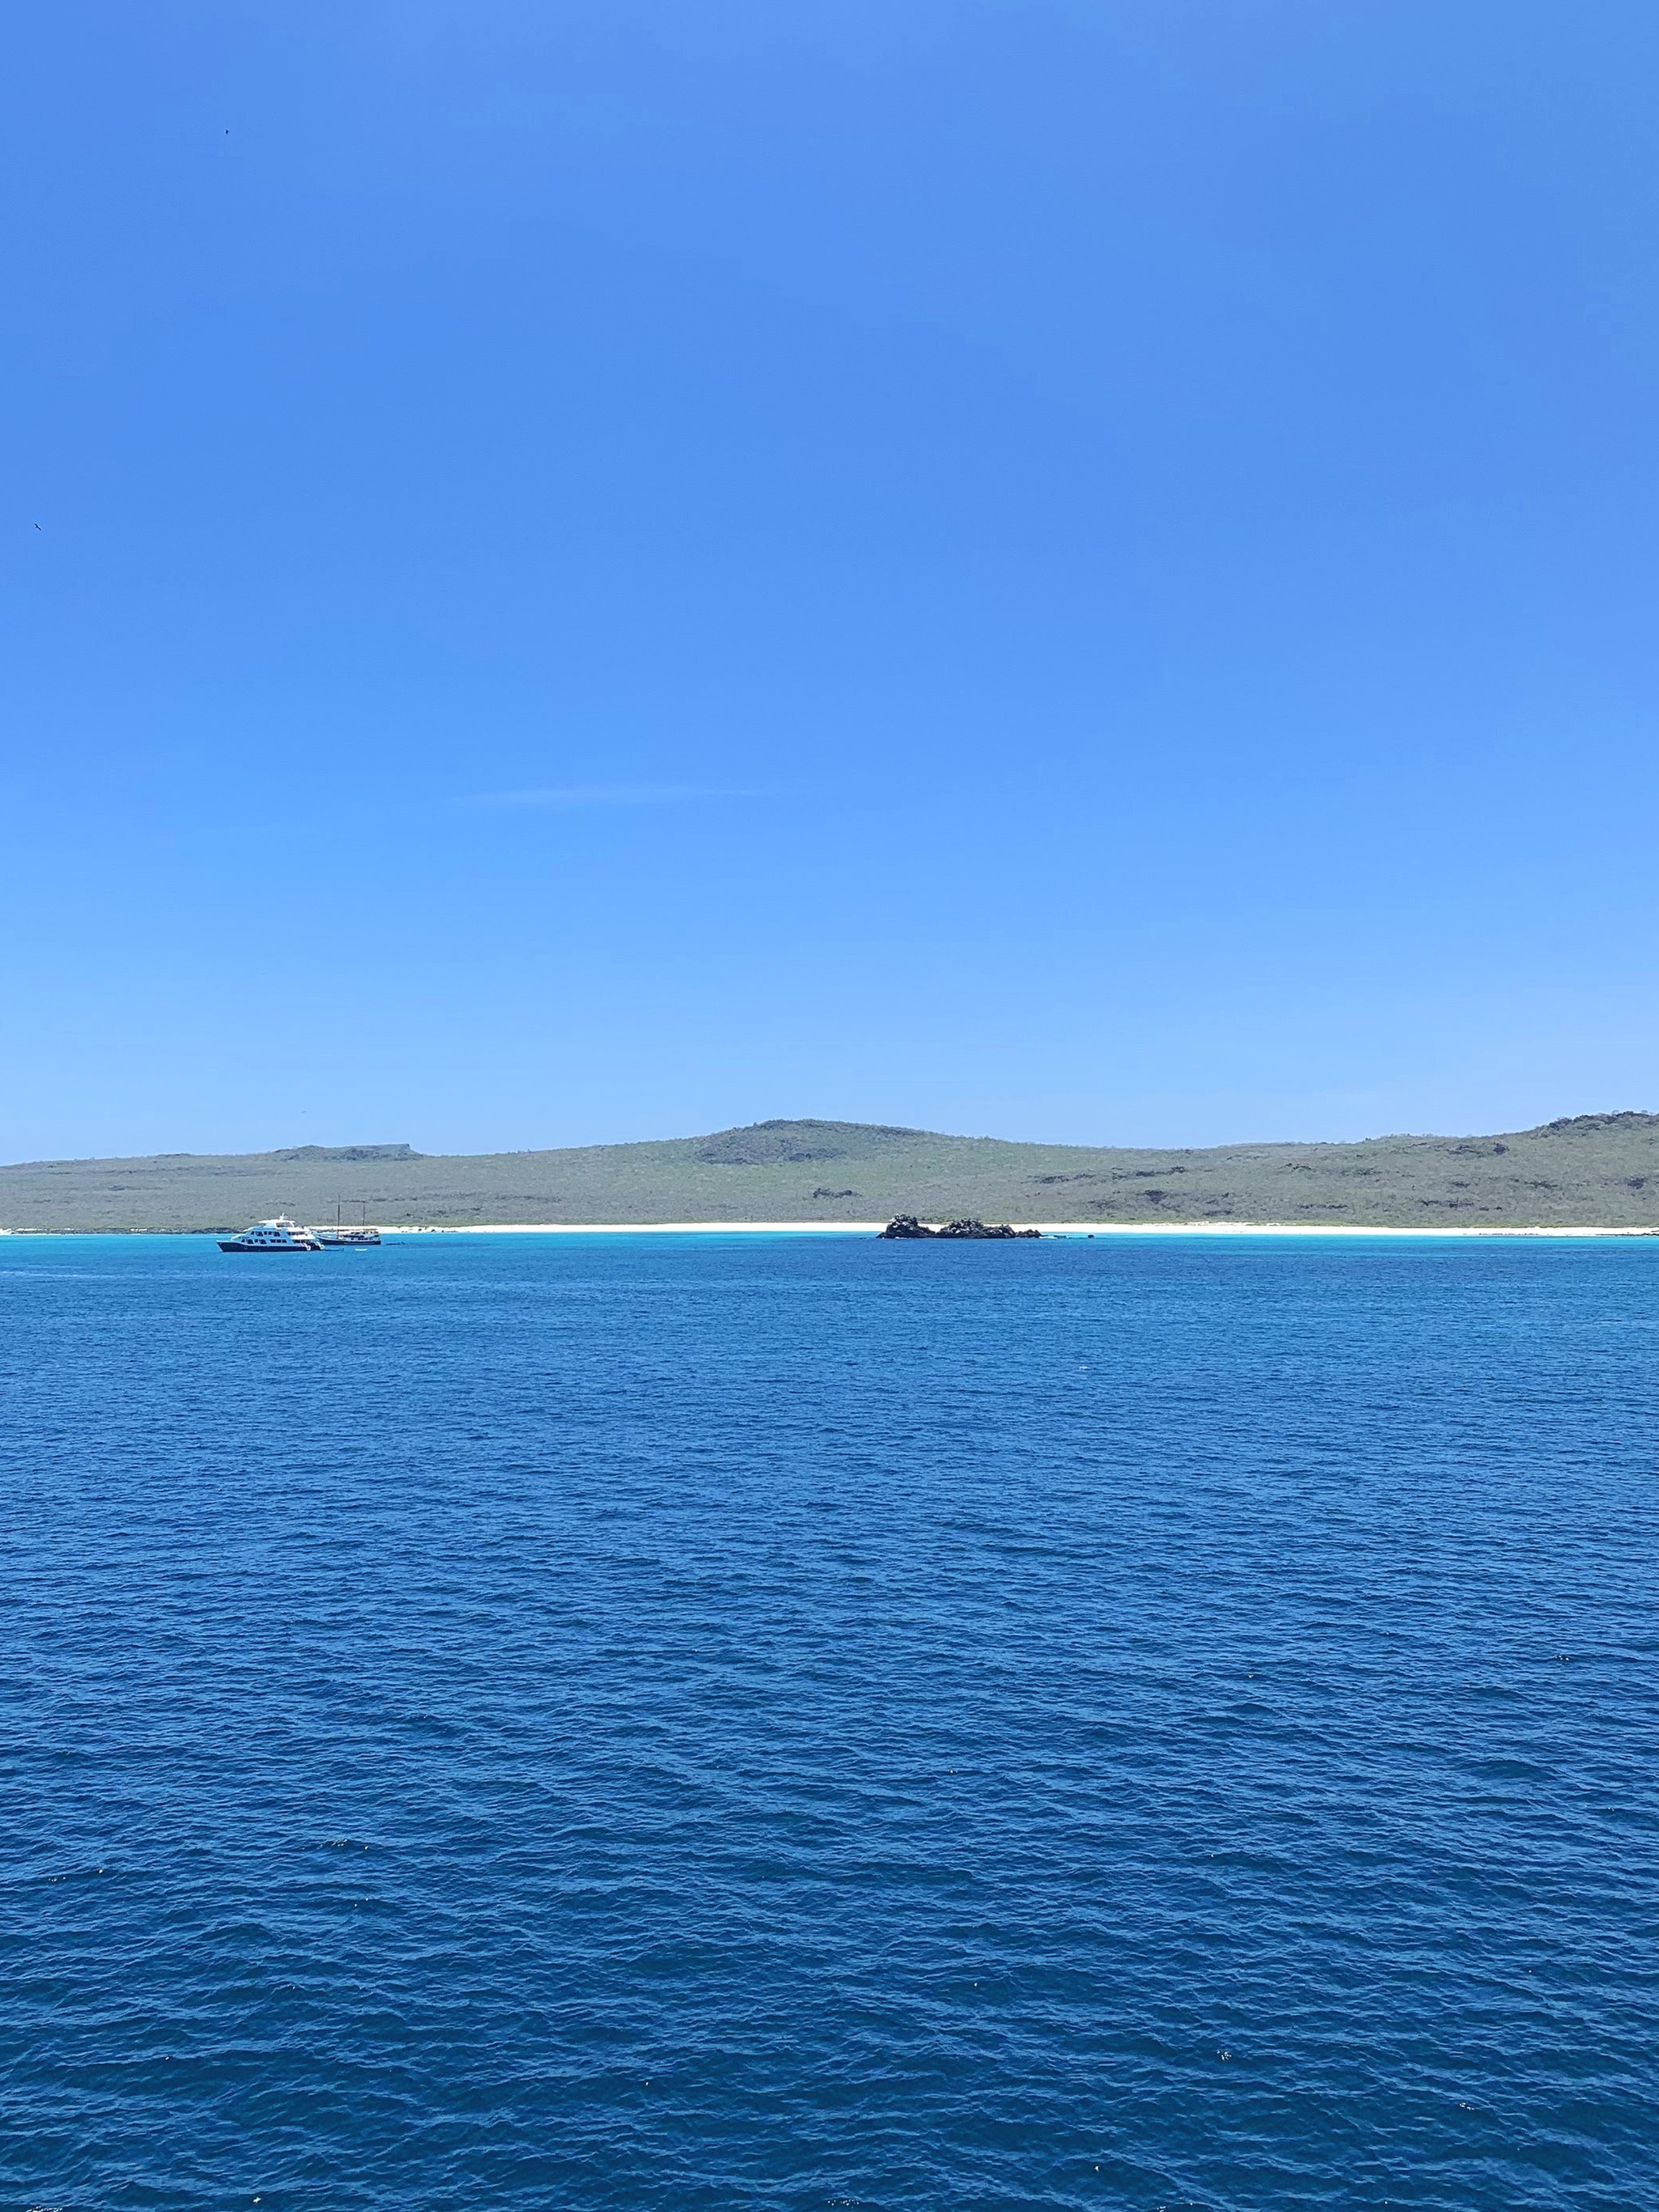  Gardner Bay viewed from the ship. 